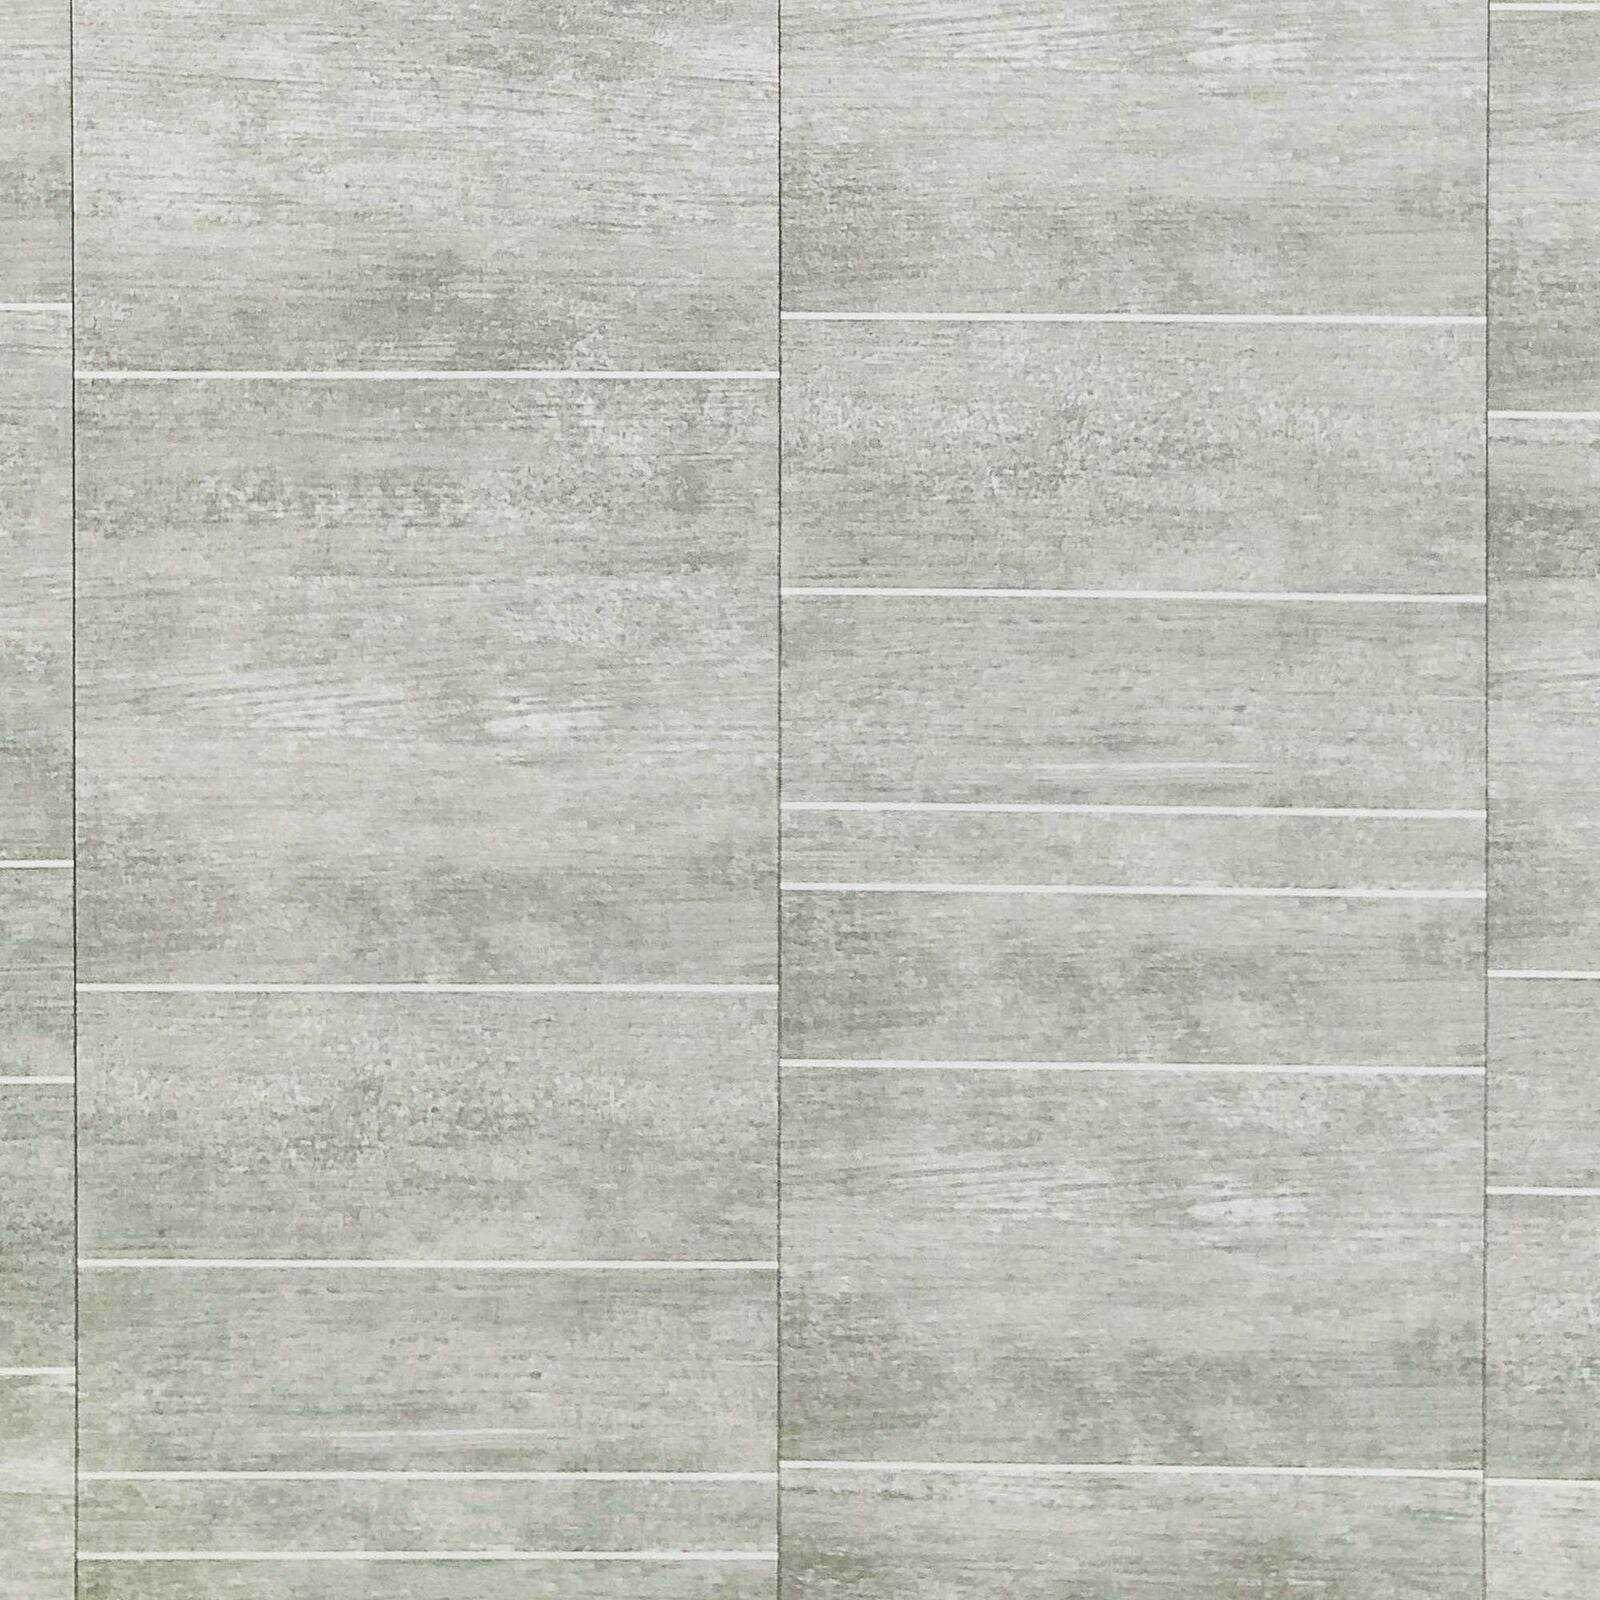 Arian Light Grey Stone Tile 8mm Bathroom Wall Panels (Pack of 4) - Claddtech